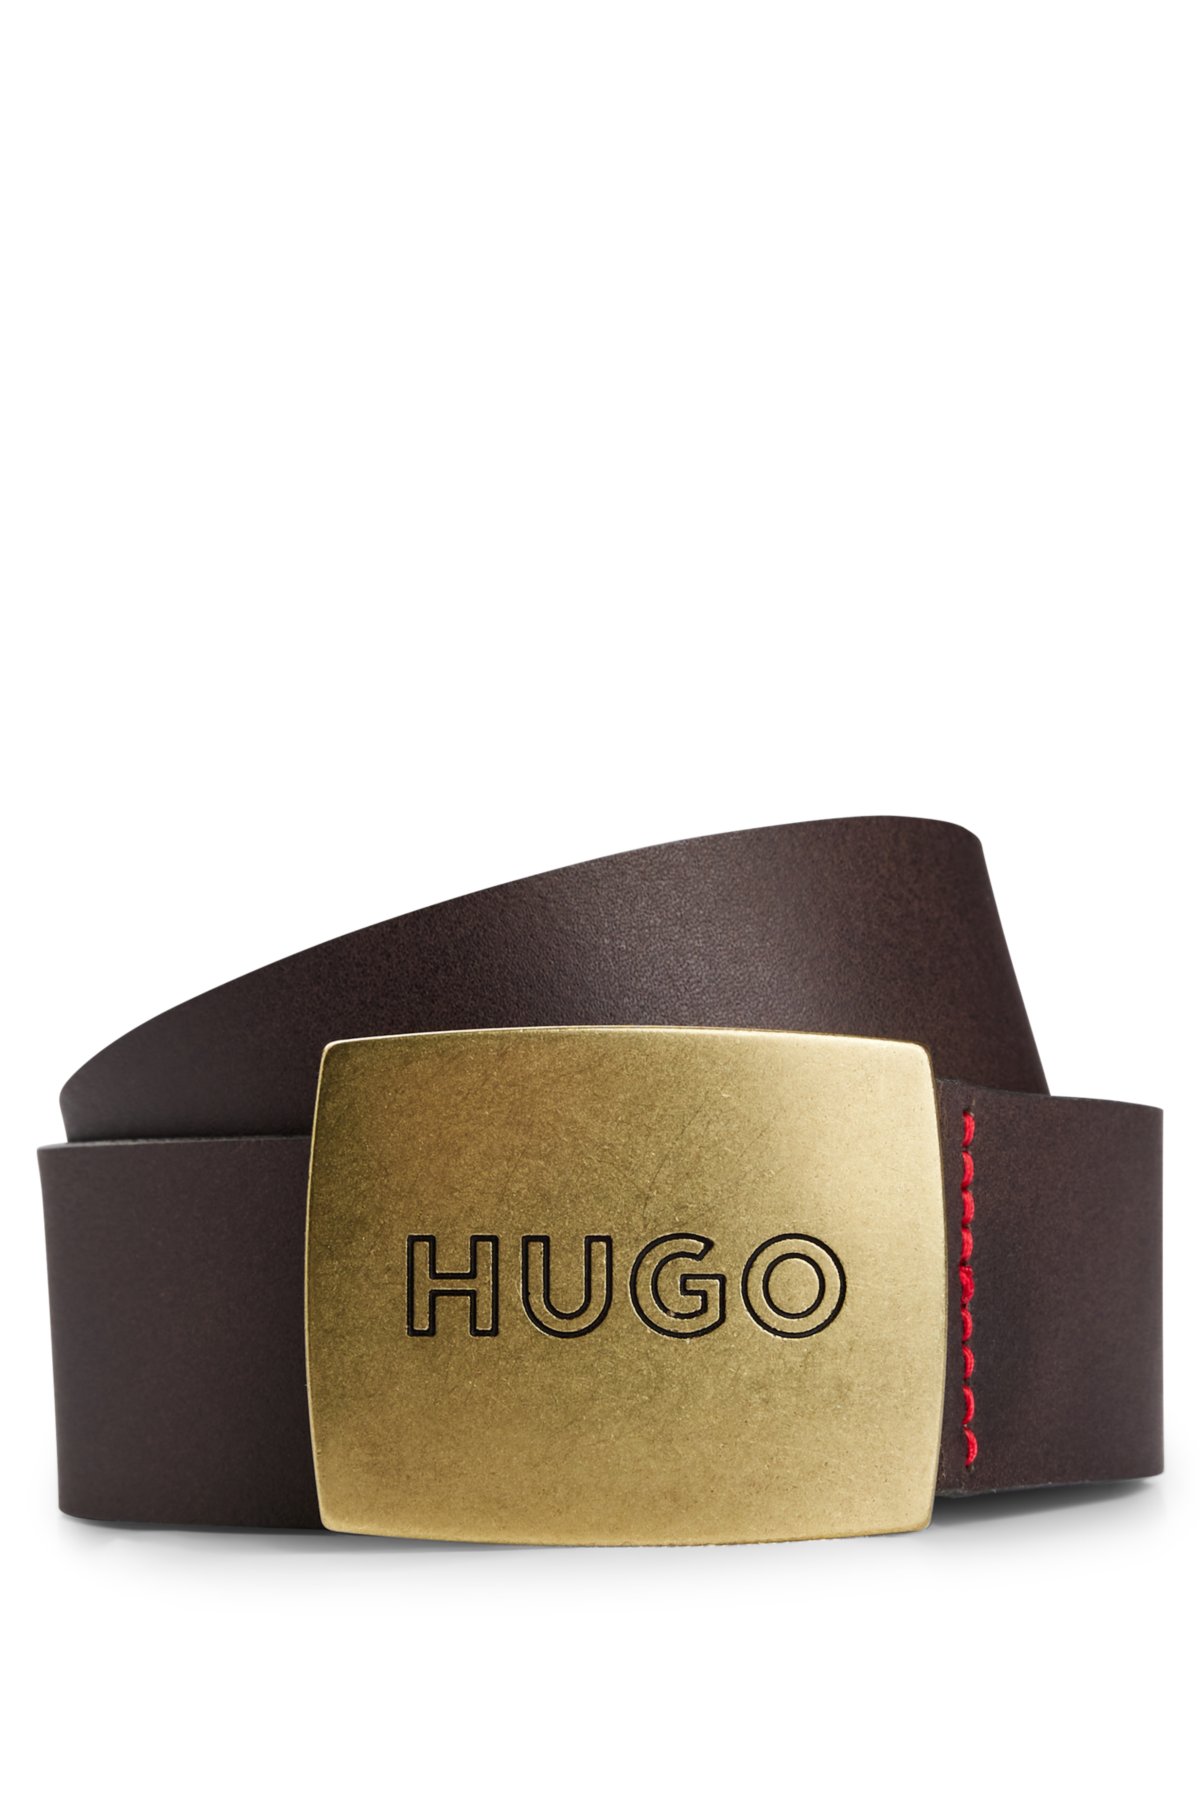 HUGO - Ledergürtel mit Logo auf Koppelschließe der